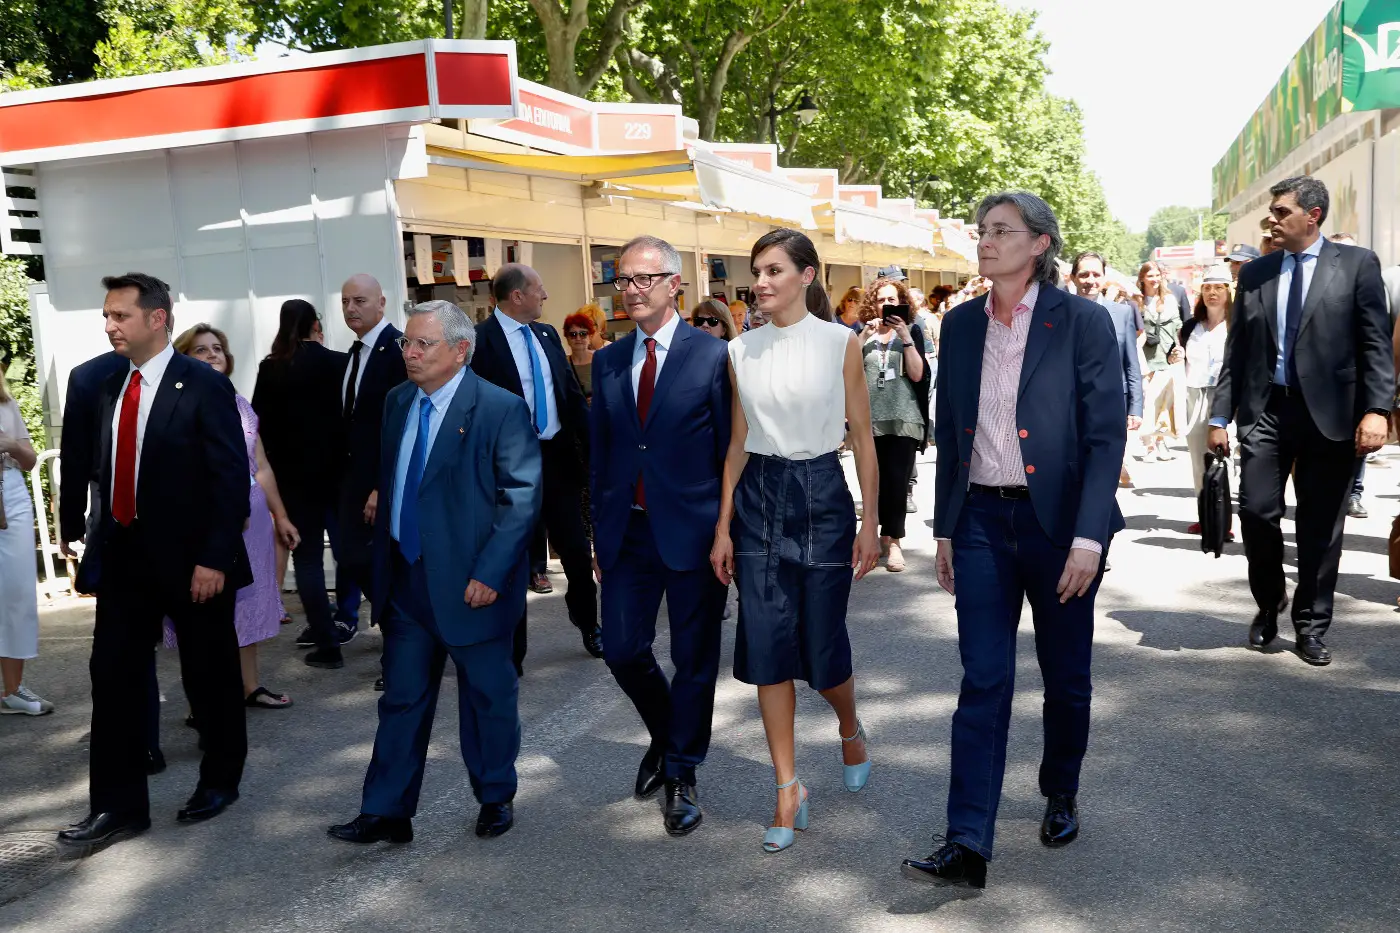 Queen Letizia wore a summer white top and blue denim skirt for madrid book fair